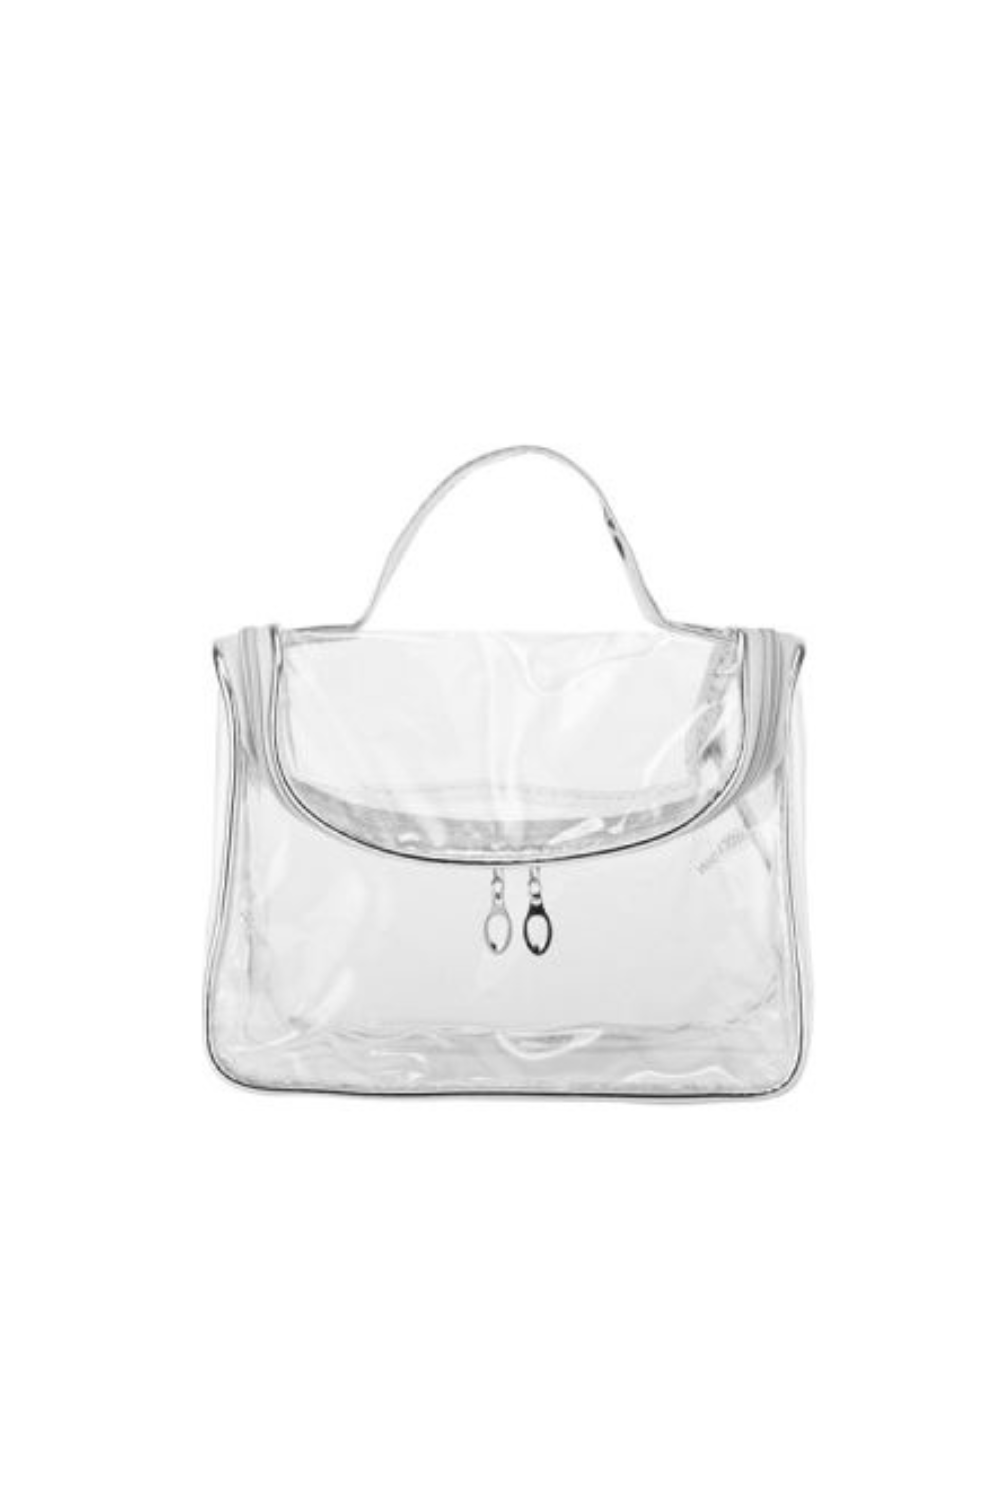 Silver Trim Cosmetic Bag